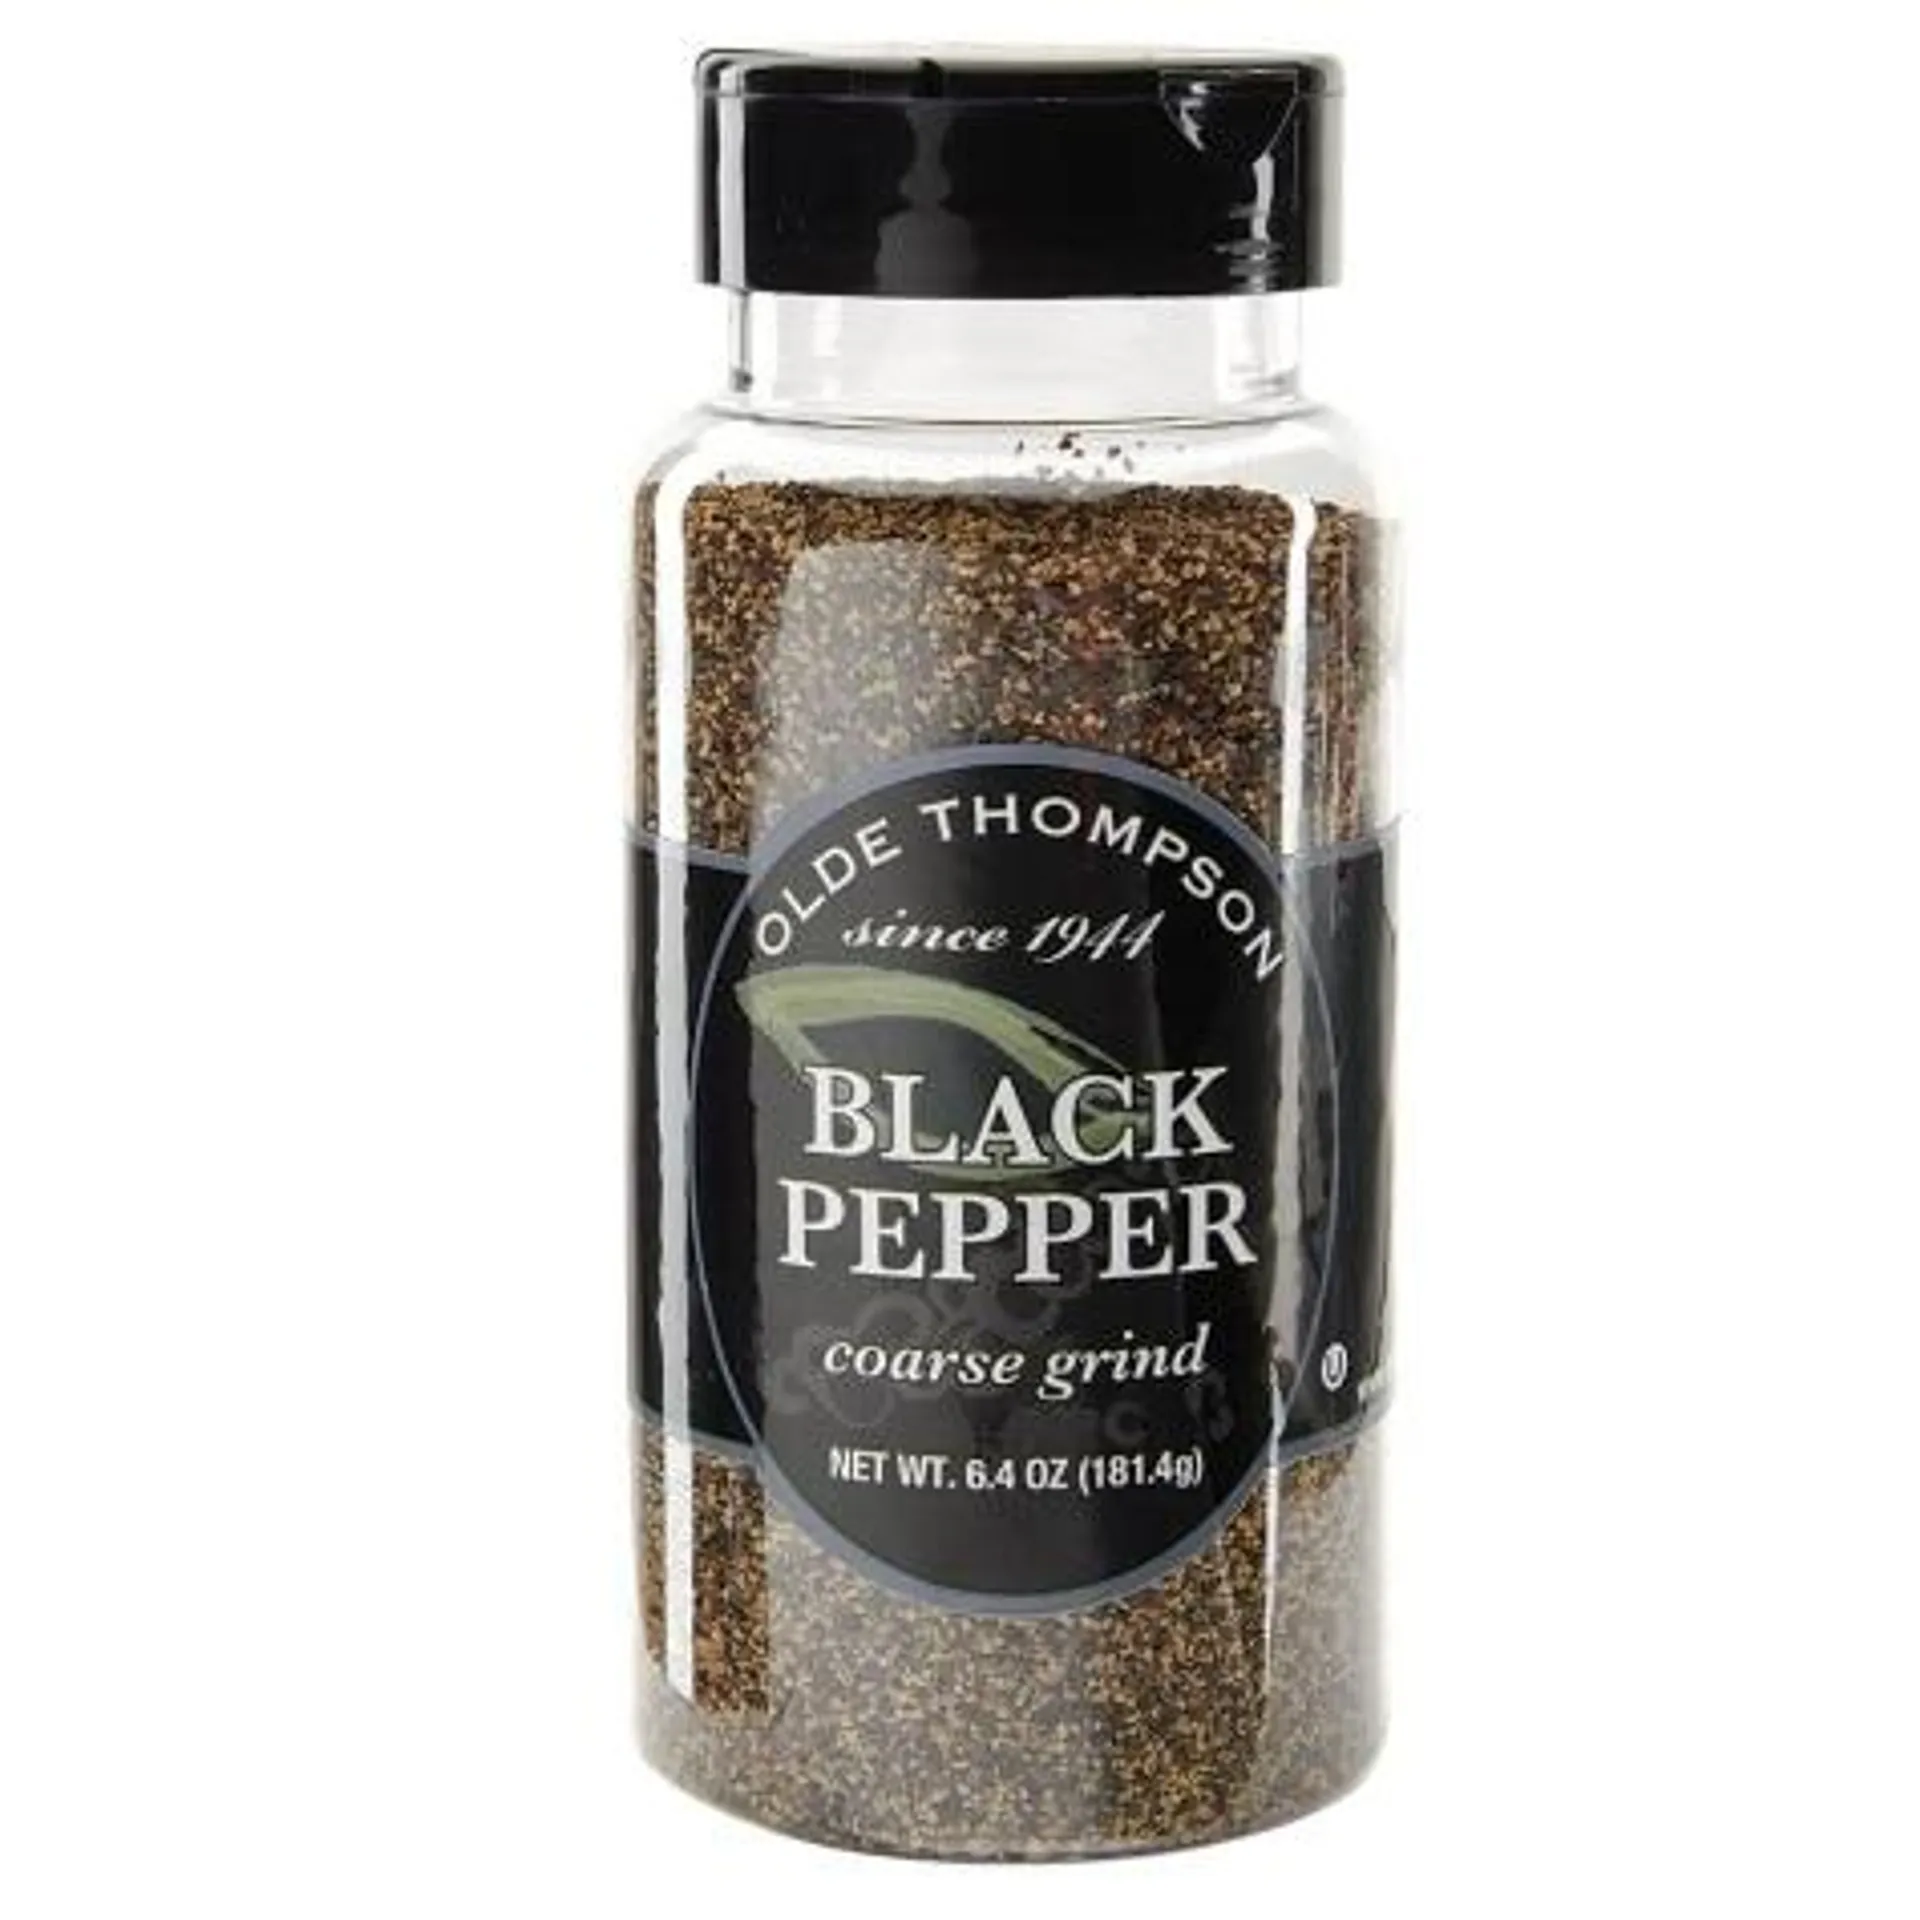 Olde Thompson Coarse Grind Malabar Black Pepper, 6.4 oz